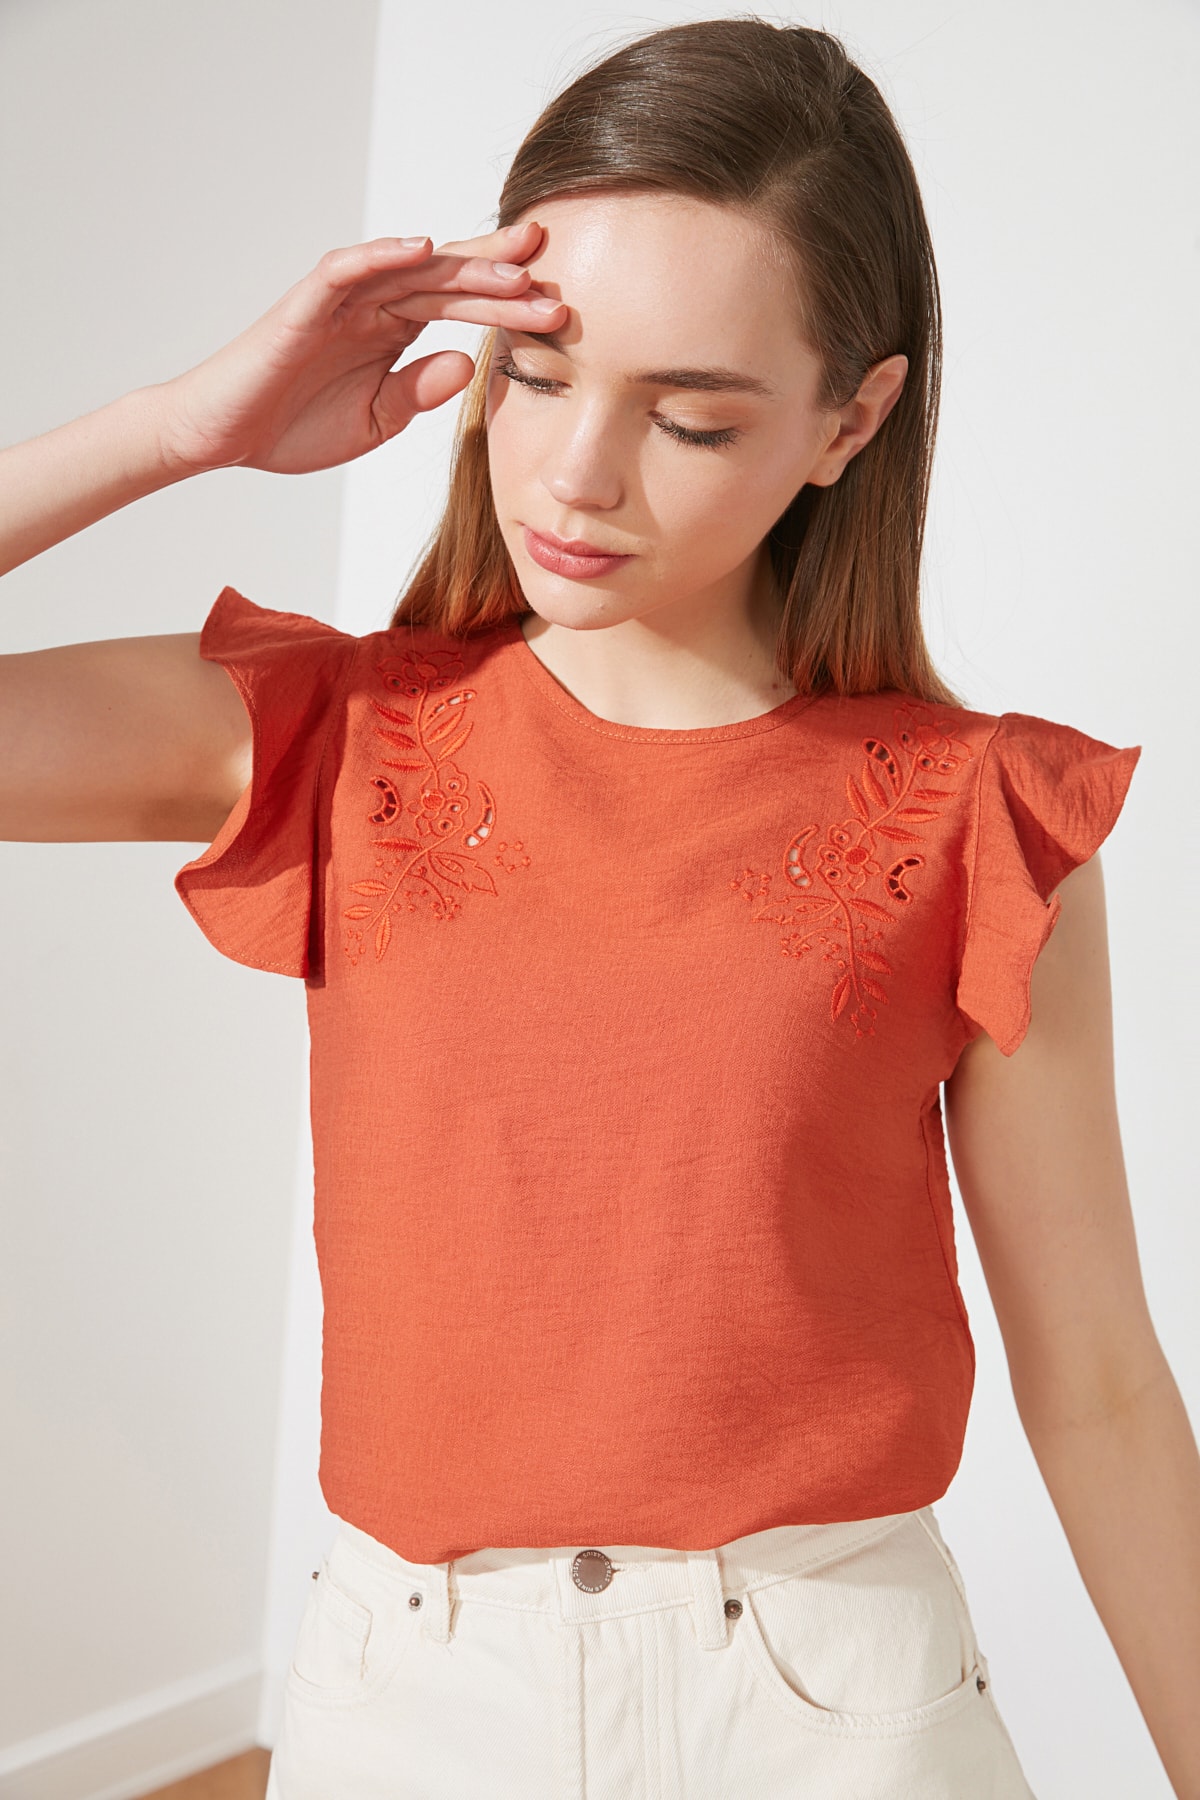 бежевая кружевная блузка и юбка Блузка Trendyol кружевная, оранжевый